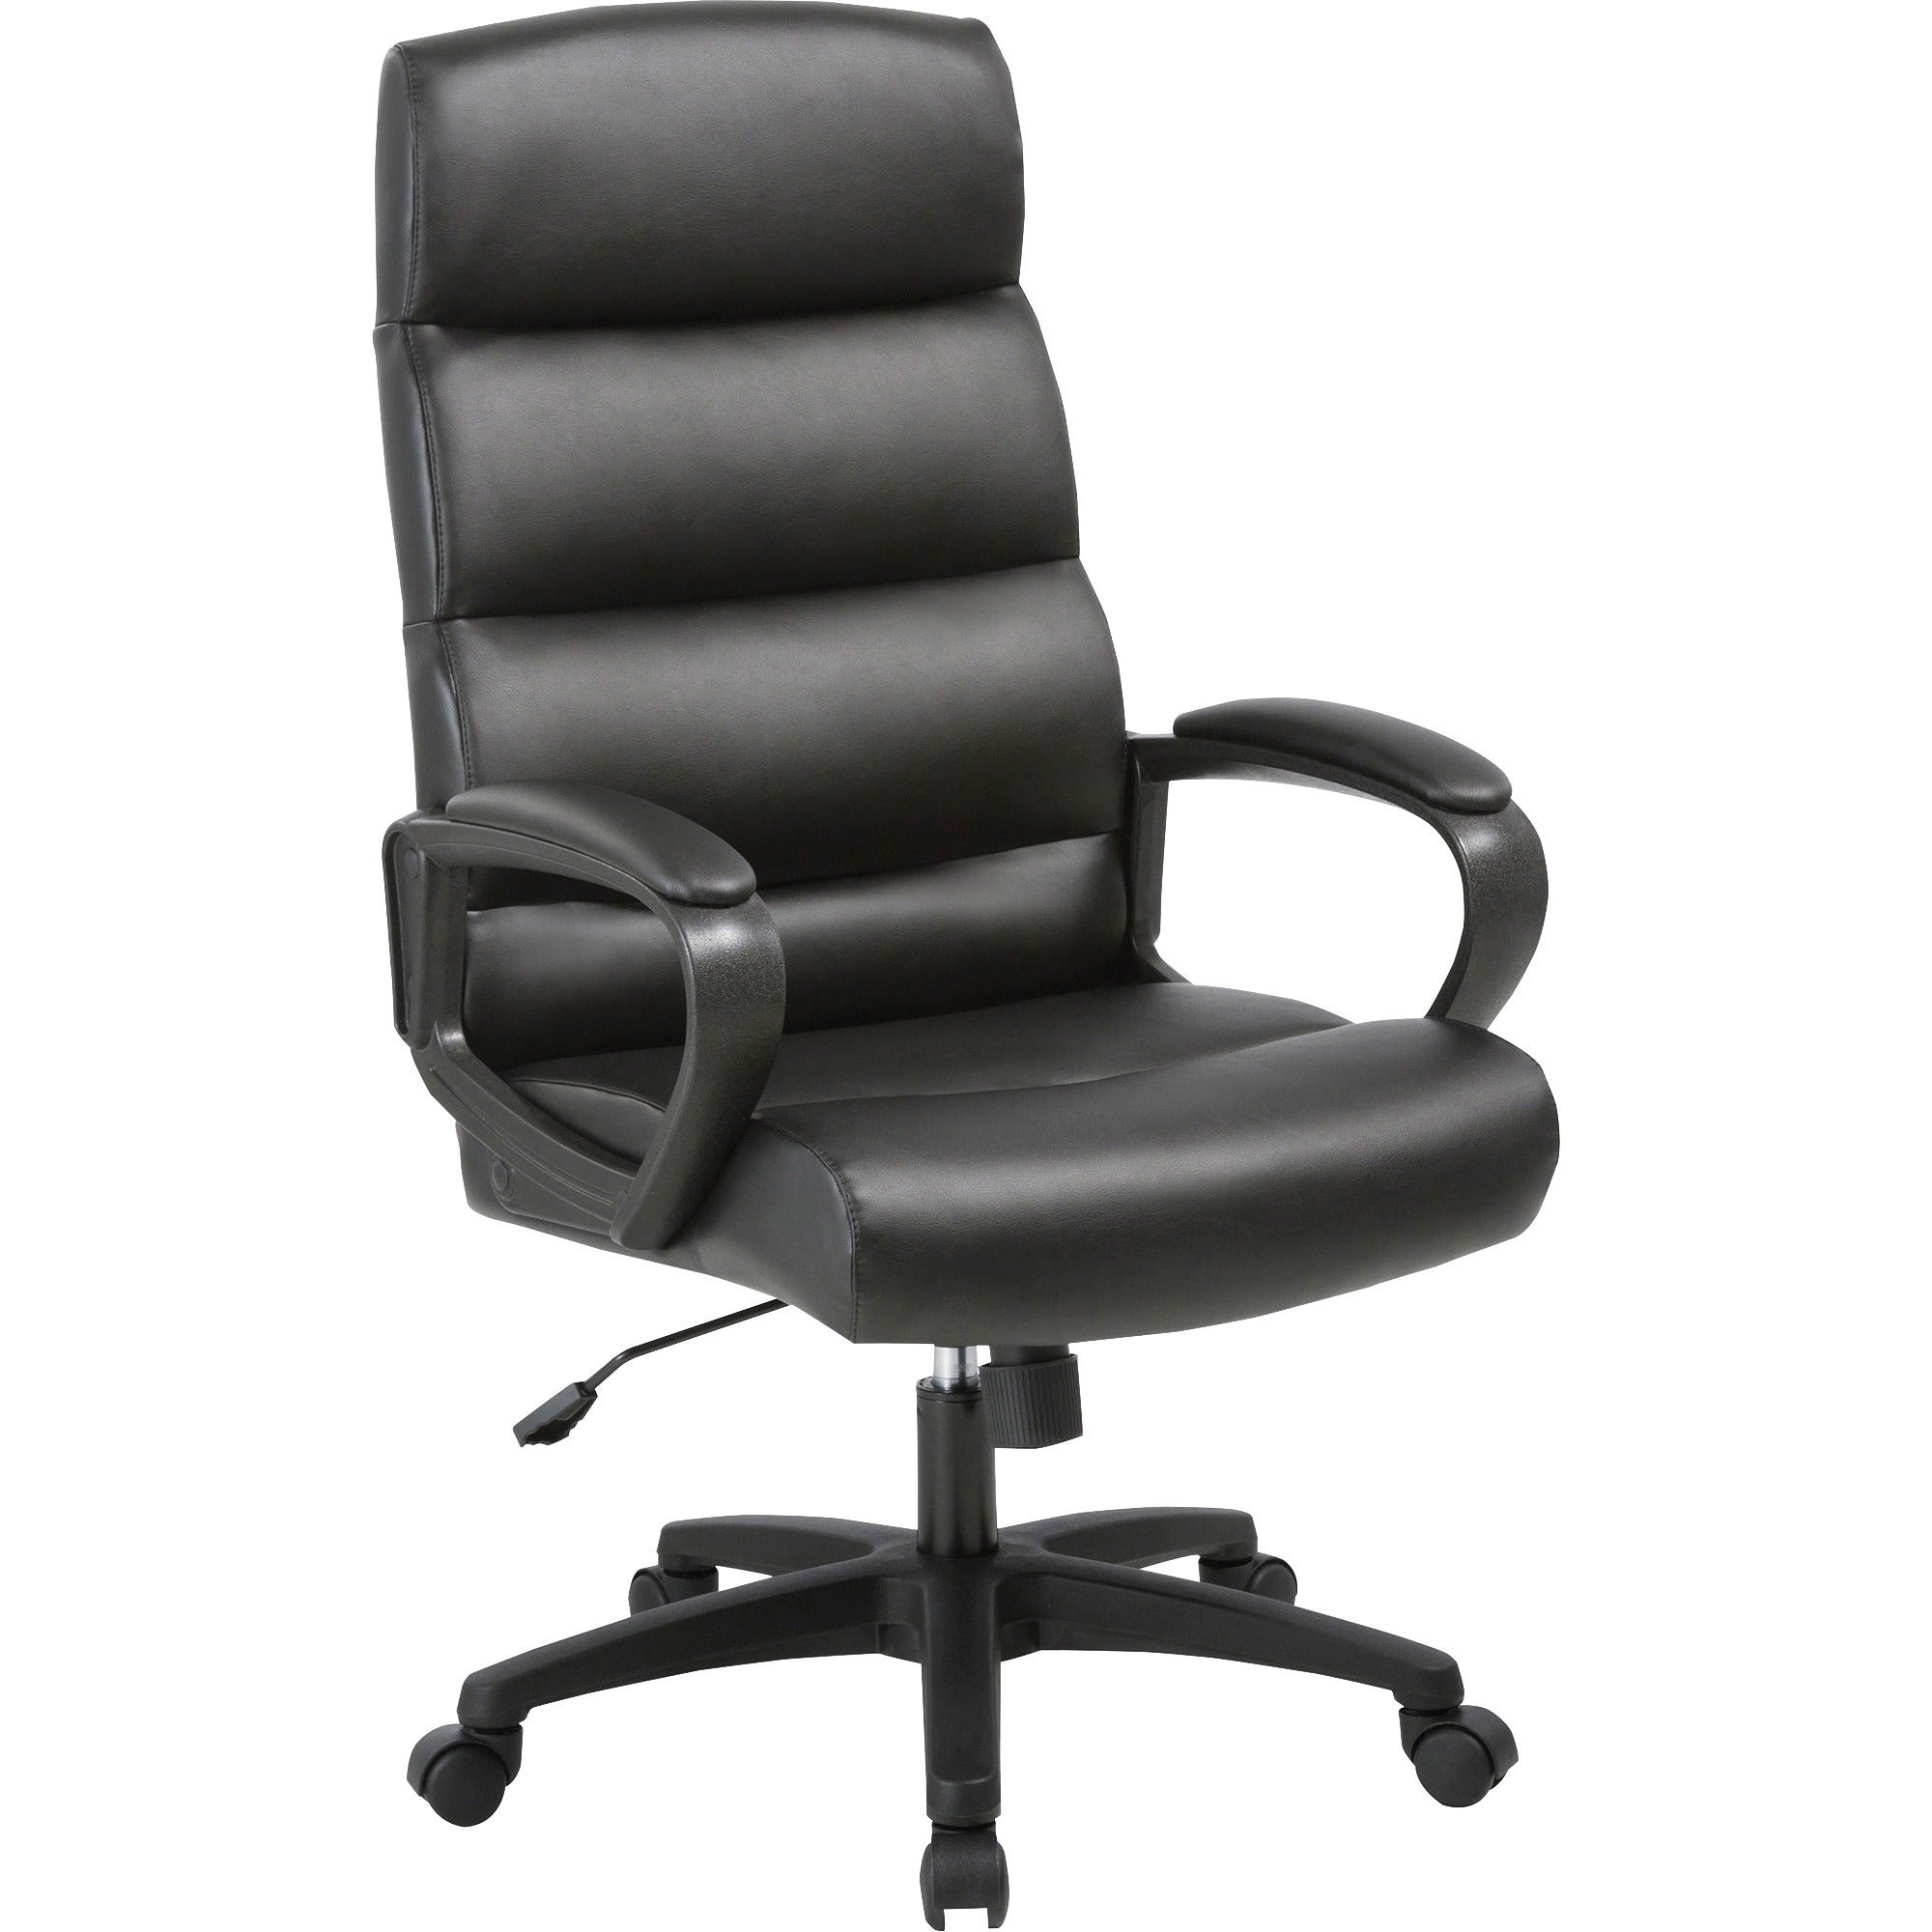 soho-soho-high-back-executive-chair-black-bonded-leather-seat-black-bonded-leather-back-high-back-5-star-base-1-each_llr41843 - 1